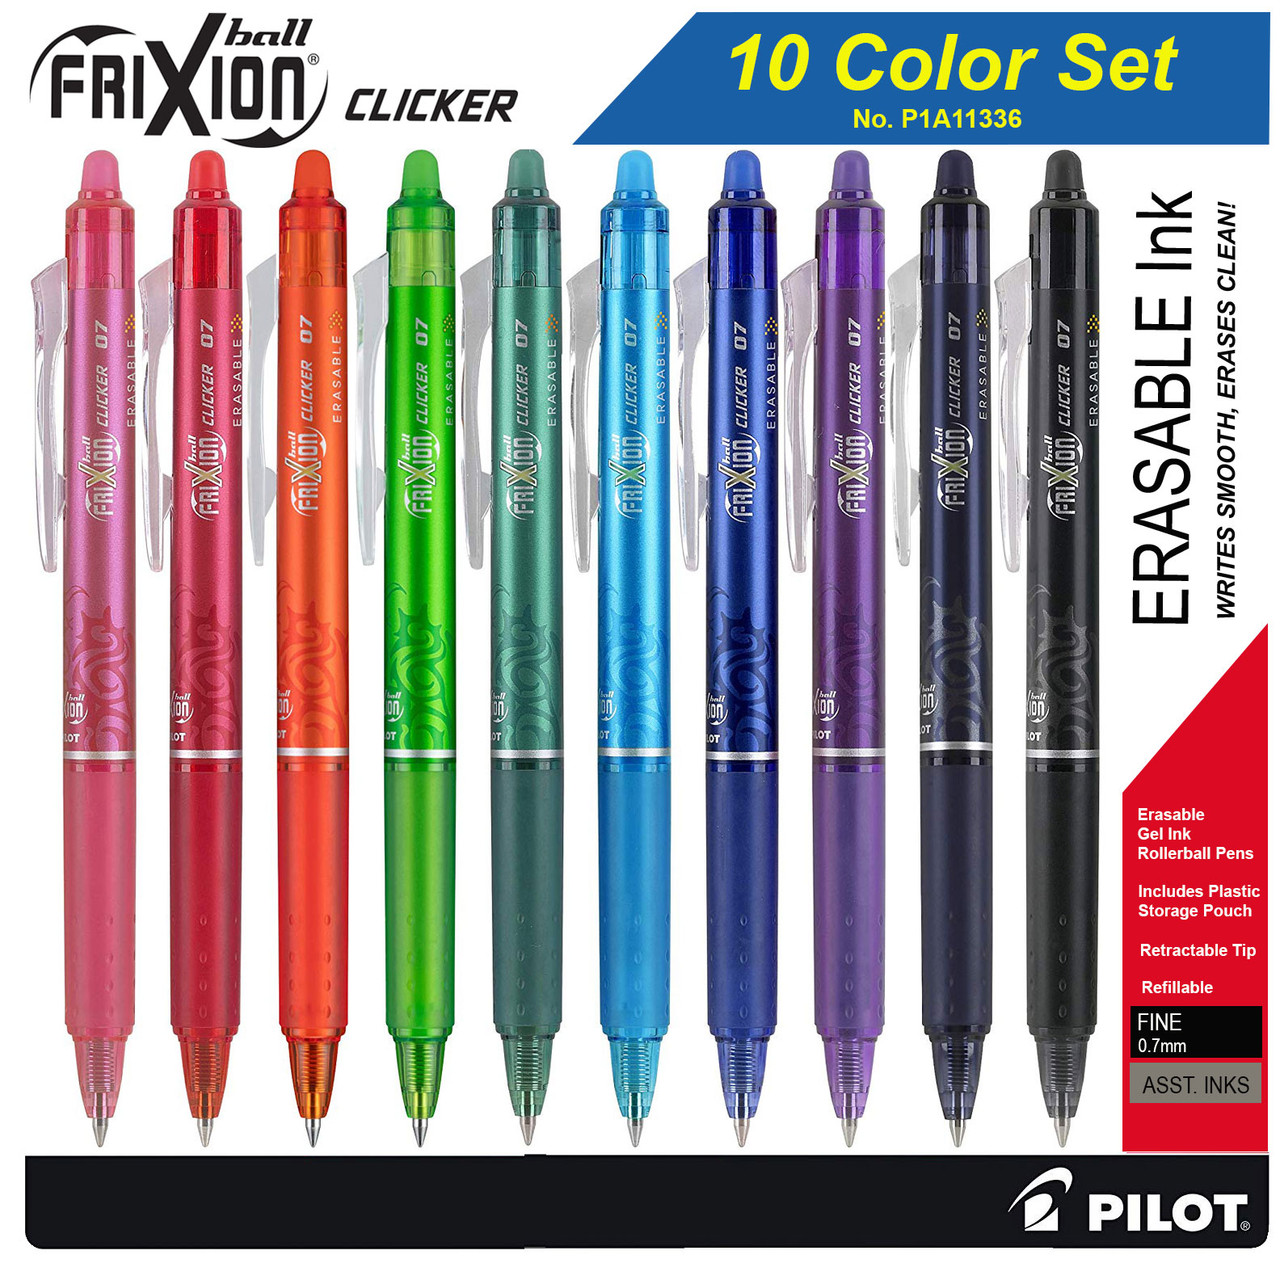 Pilot 31476 Frixion Clicker Erasable Gel Ink